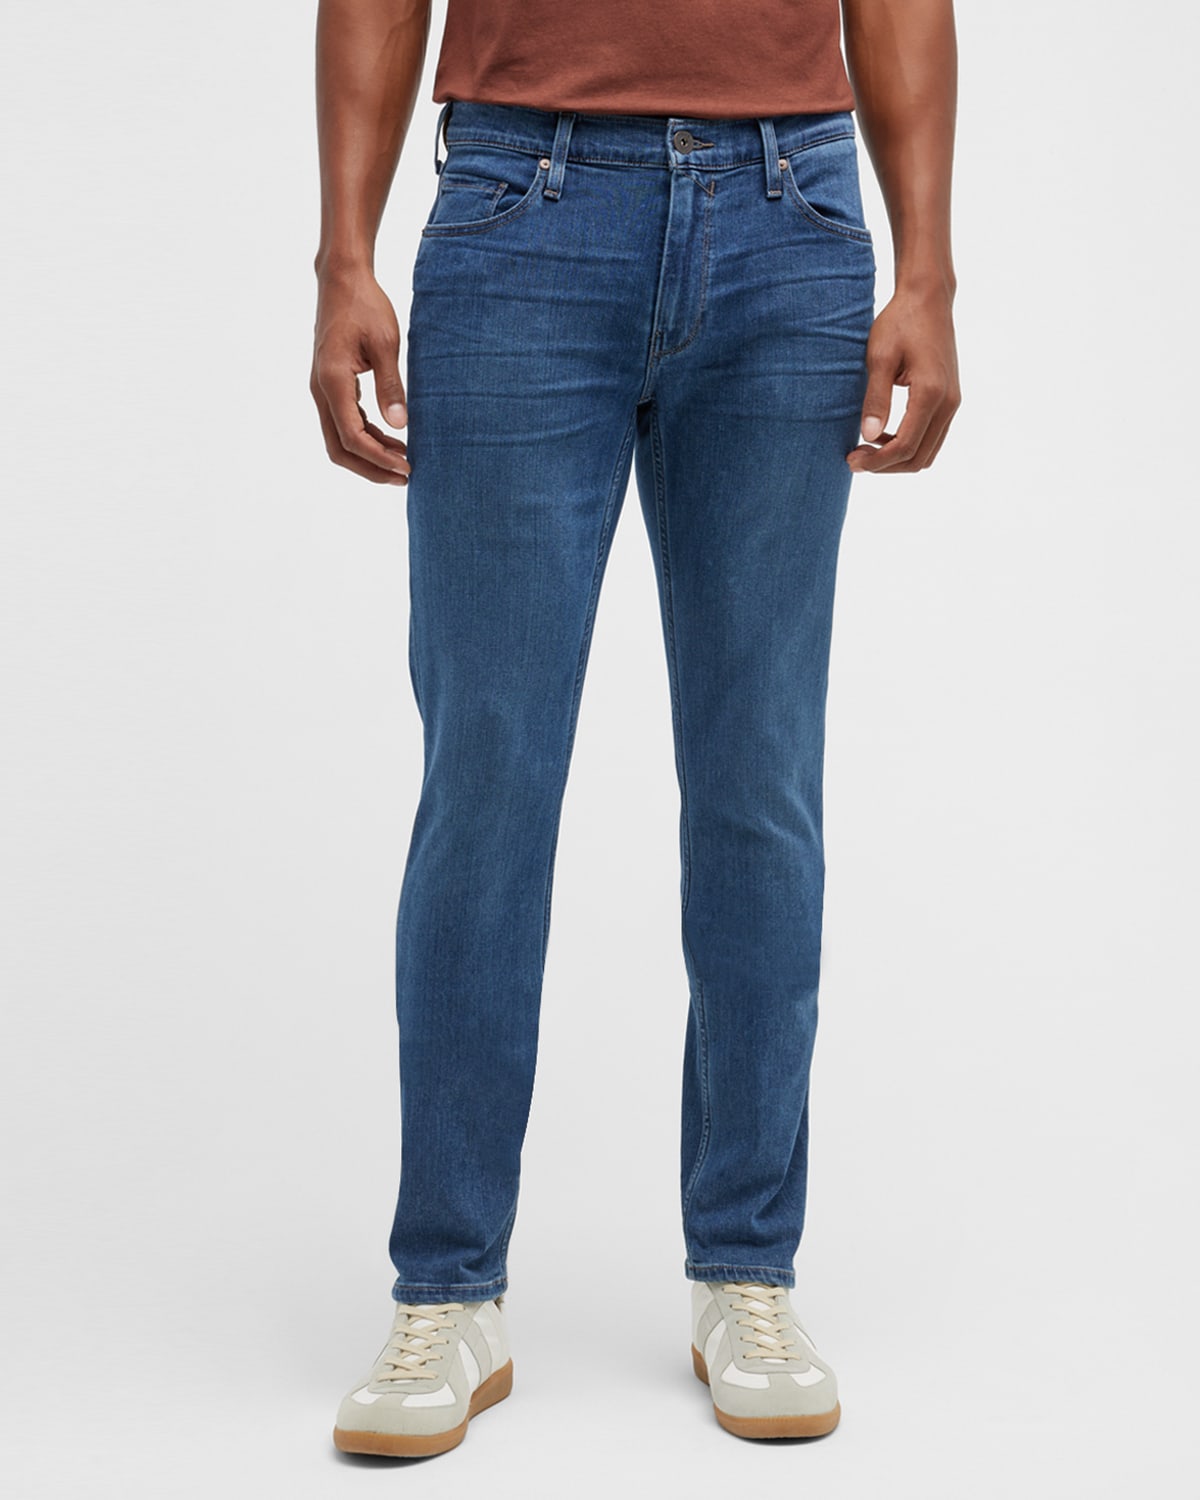 Soft Denim Jeans | Neiman Marcus